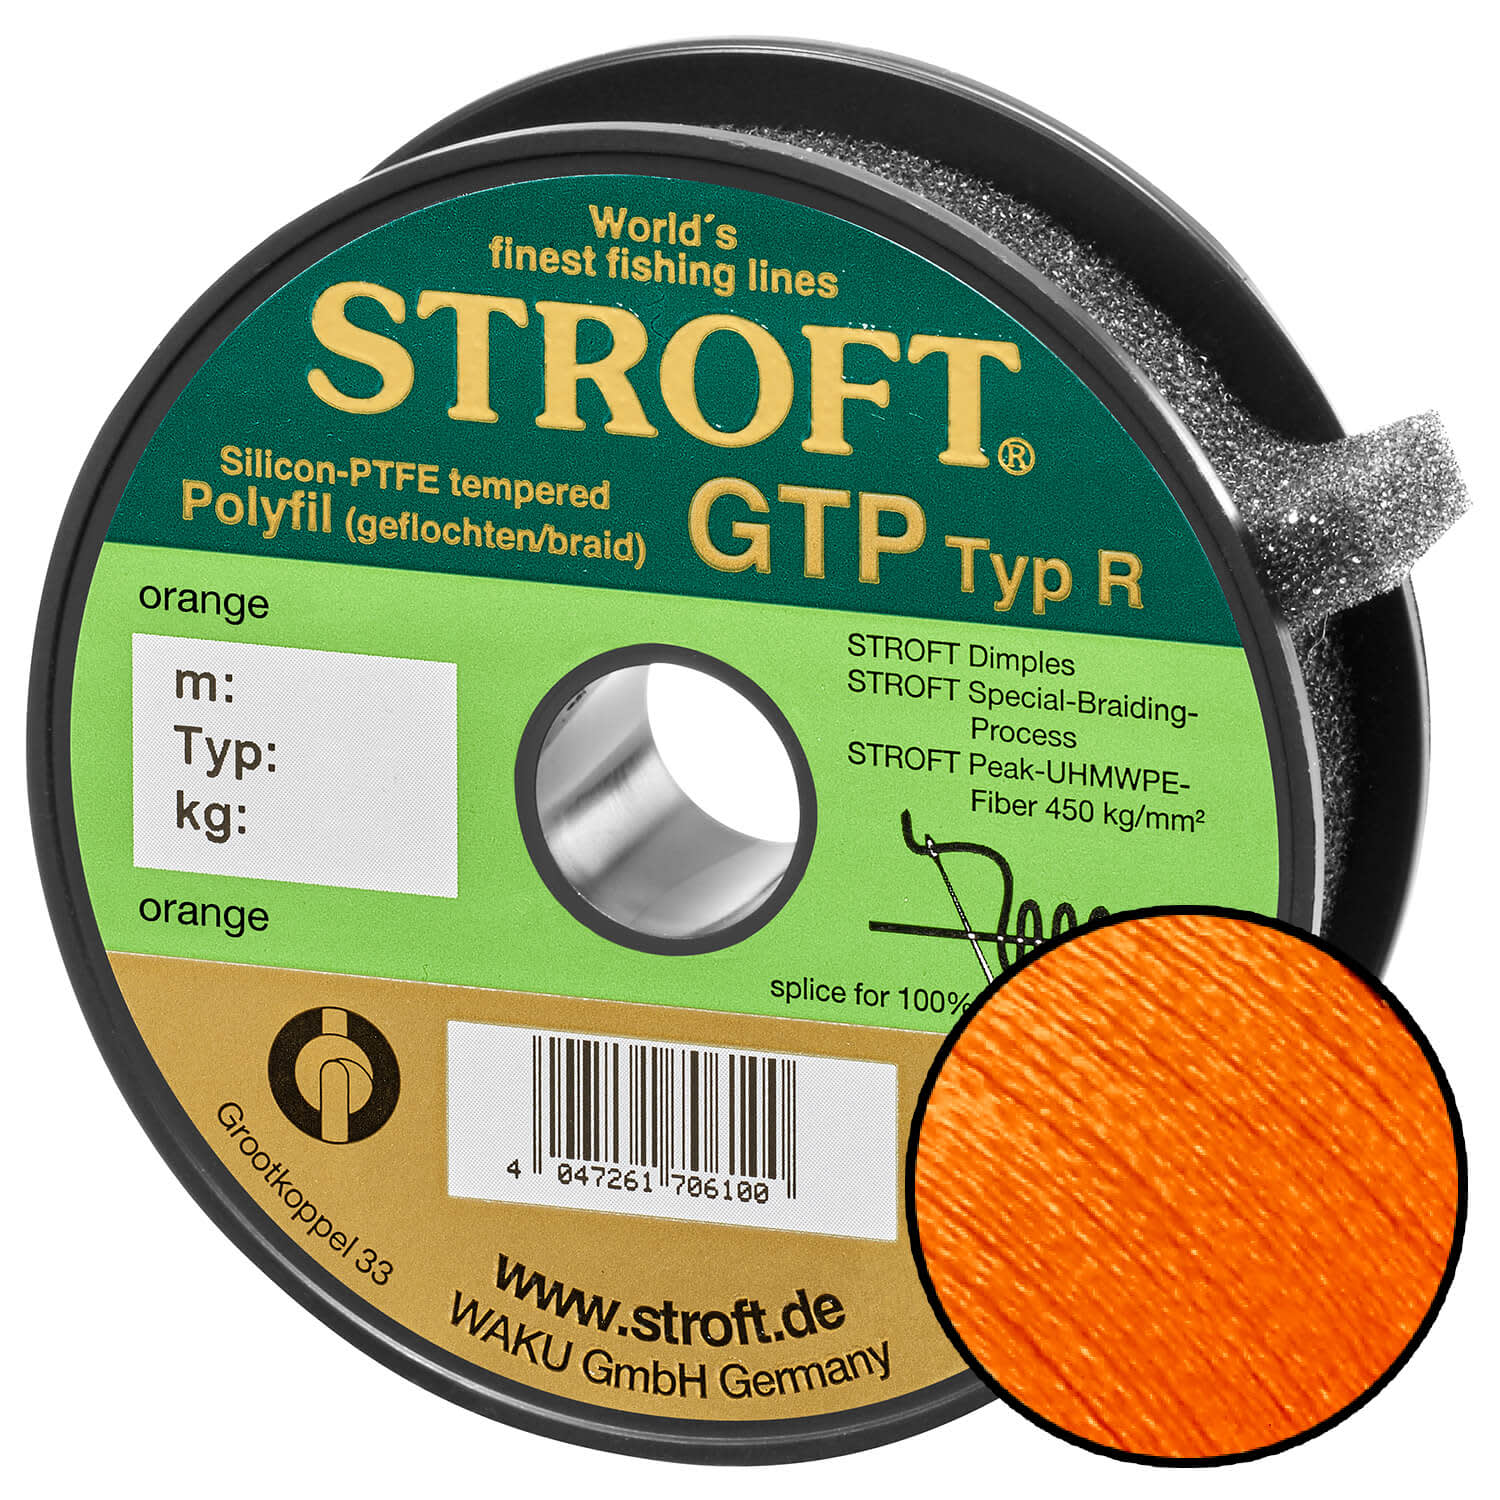 STROFT GTP Type R Braided Fishing Line 125m orange buy by Koeder Laden